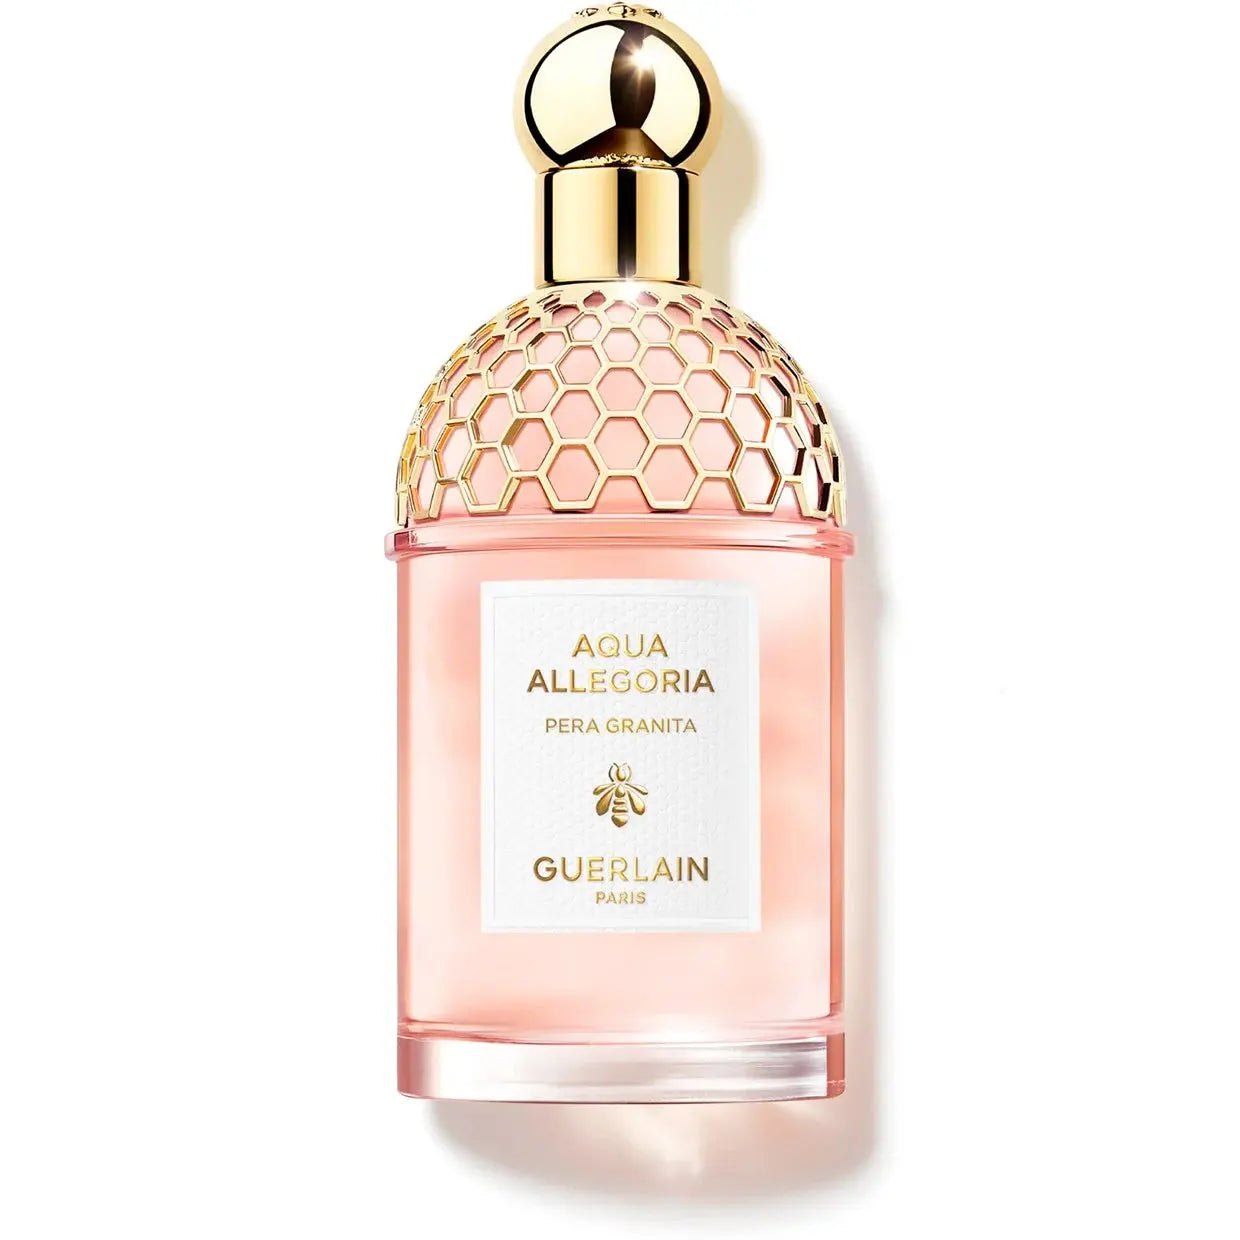 Guerlain Aqua Allegoria Pera Granita EDT Women 125ml Imported Perfumes & Beauty Store